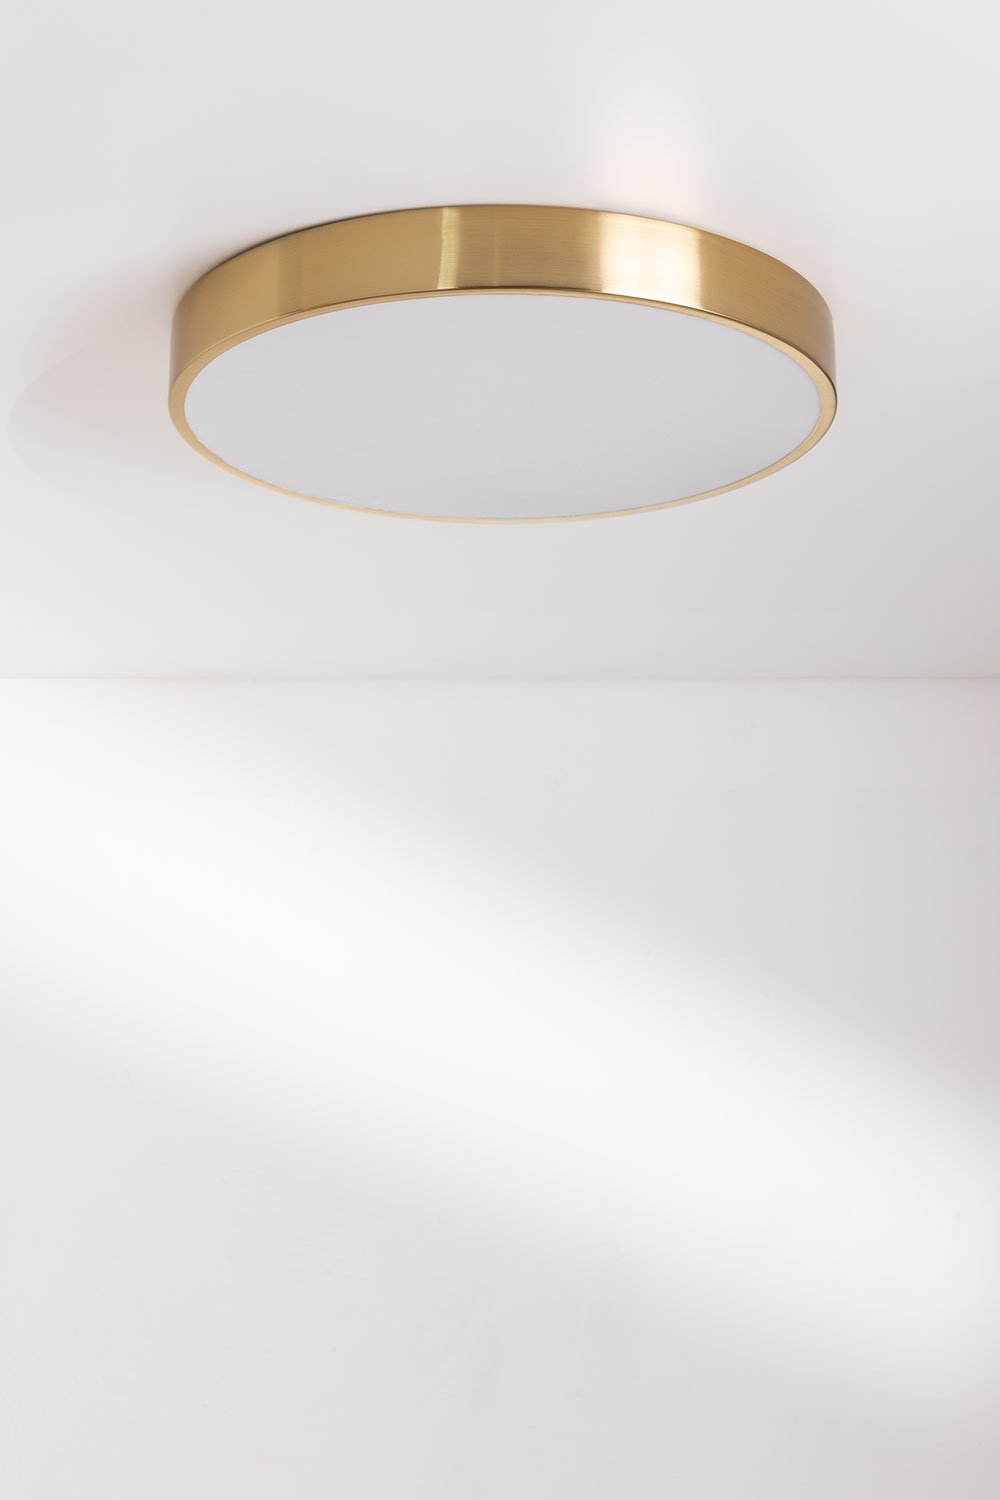 LED plafondlamp (Ø30 cm) Piercy, galerij beeld 1